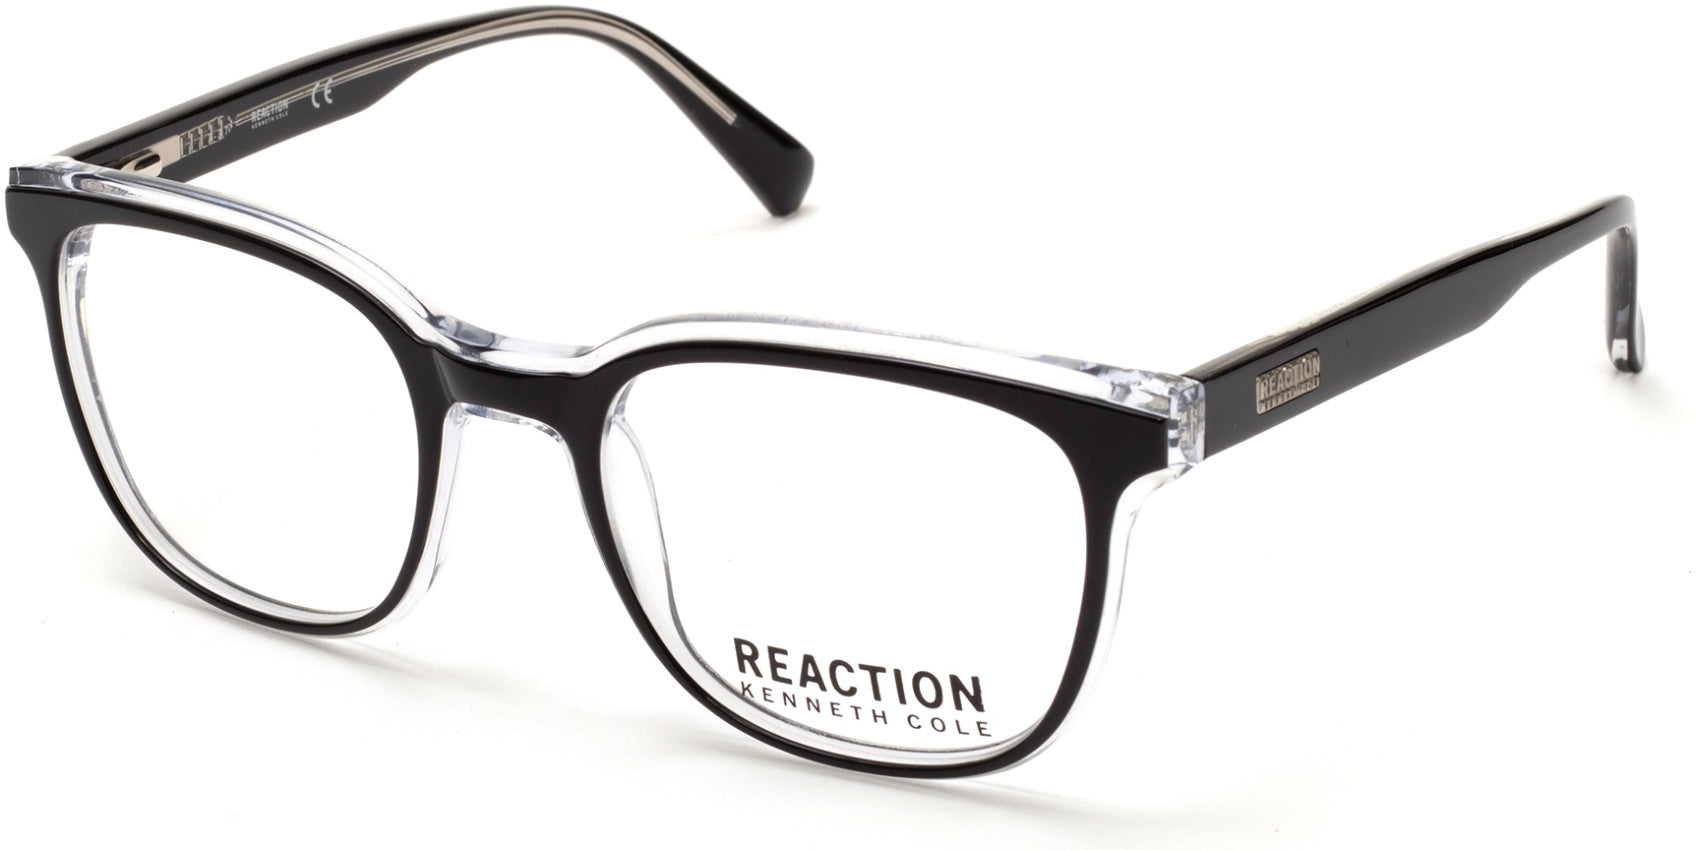 Kenneth Cole New York,Kenneth Cole Reaction KC0800 Geometric Eyeglasses 005-005 - Black